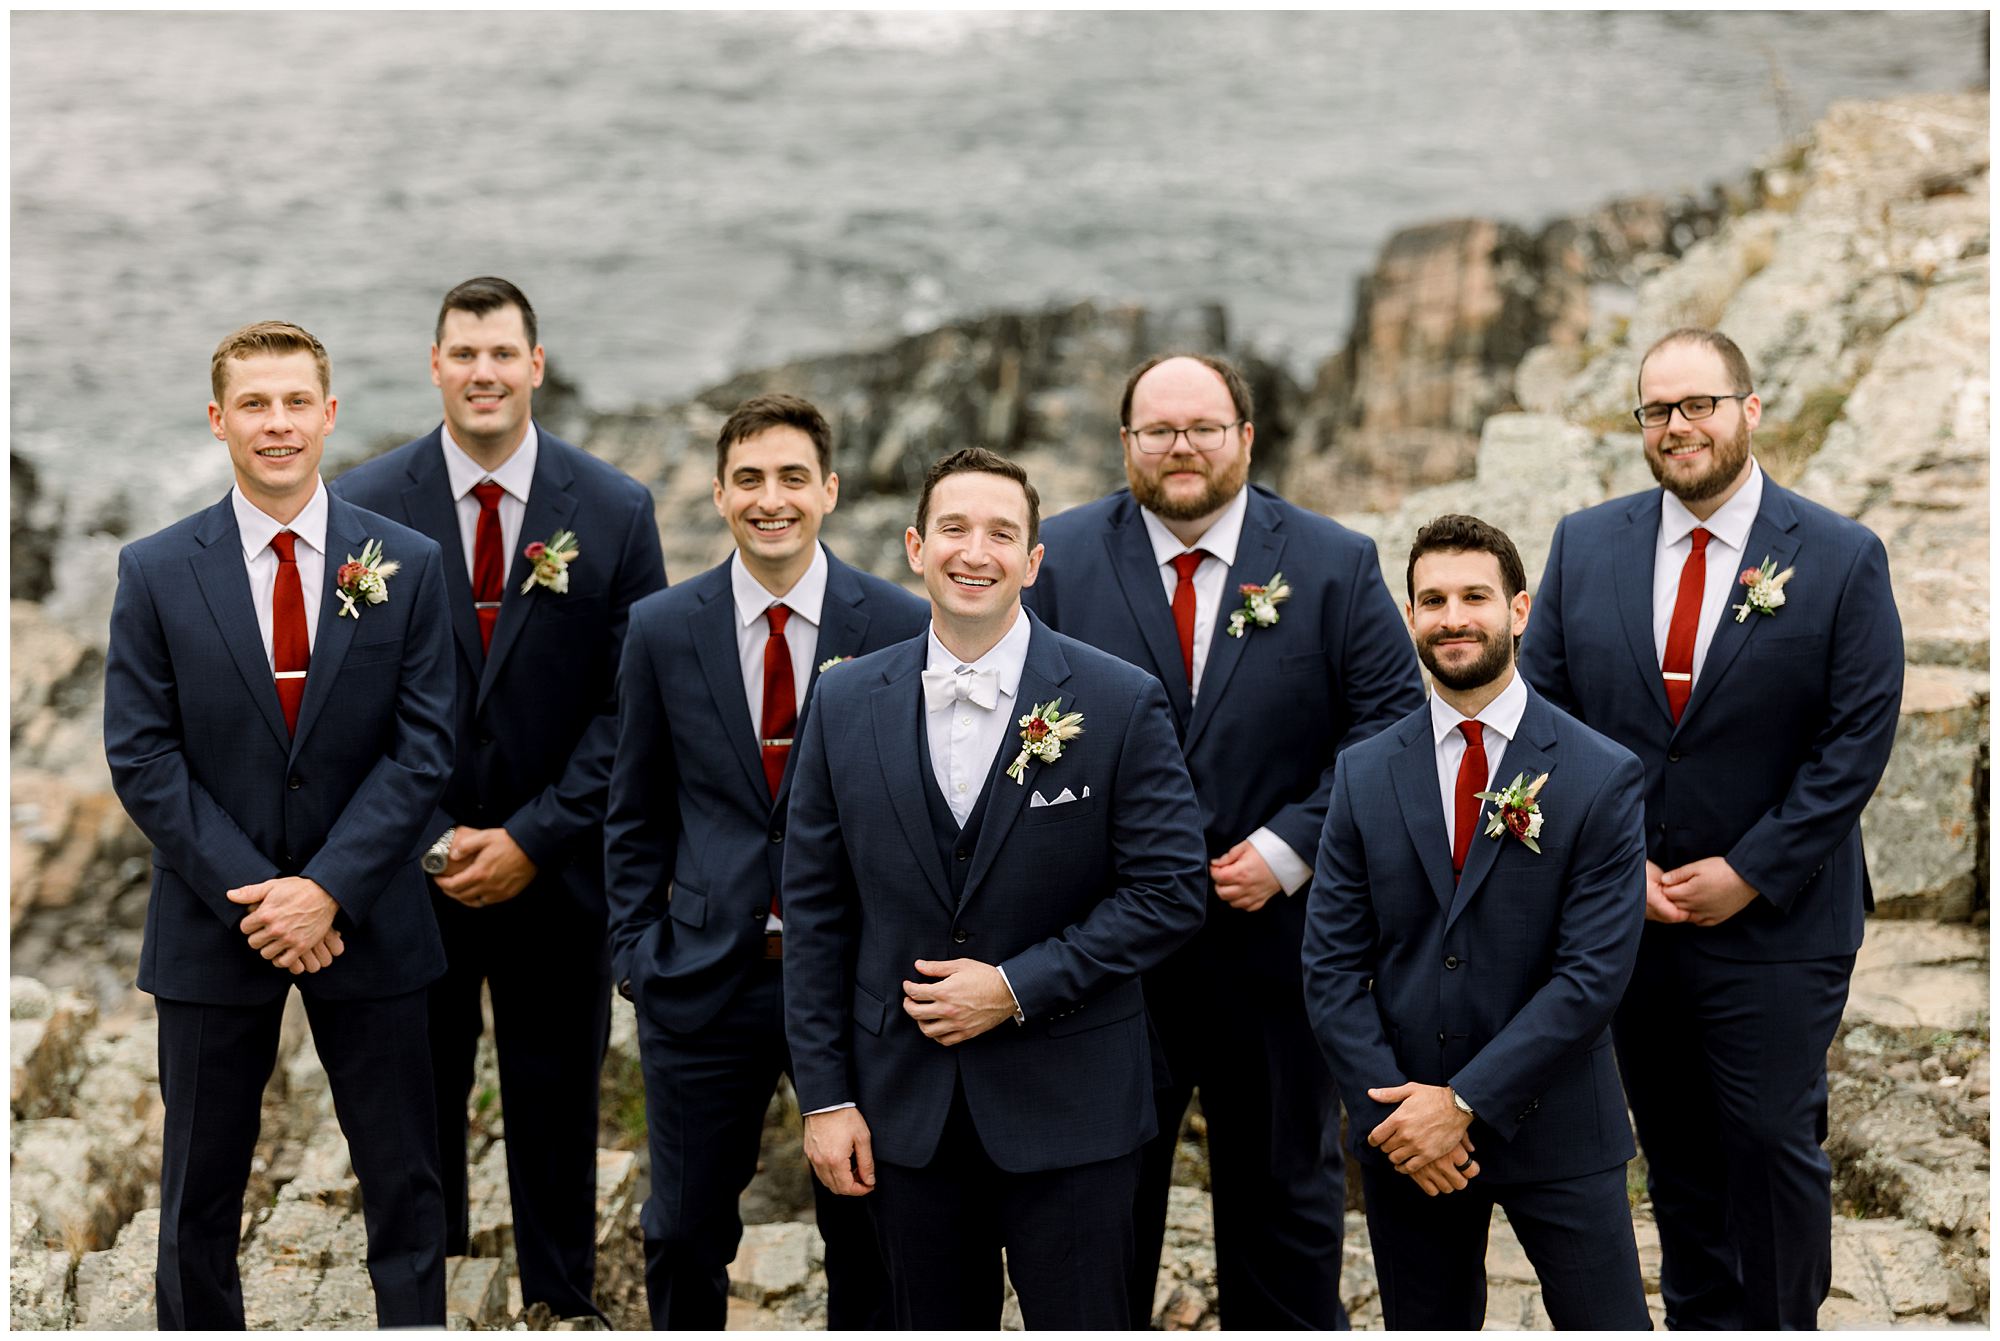 Cliff House Maine wedding photos of Groomsmen on the Cliffs